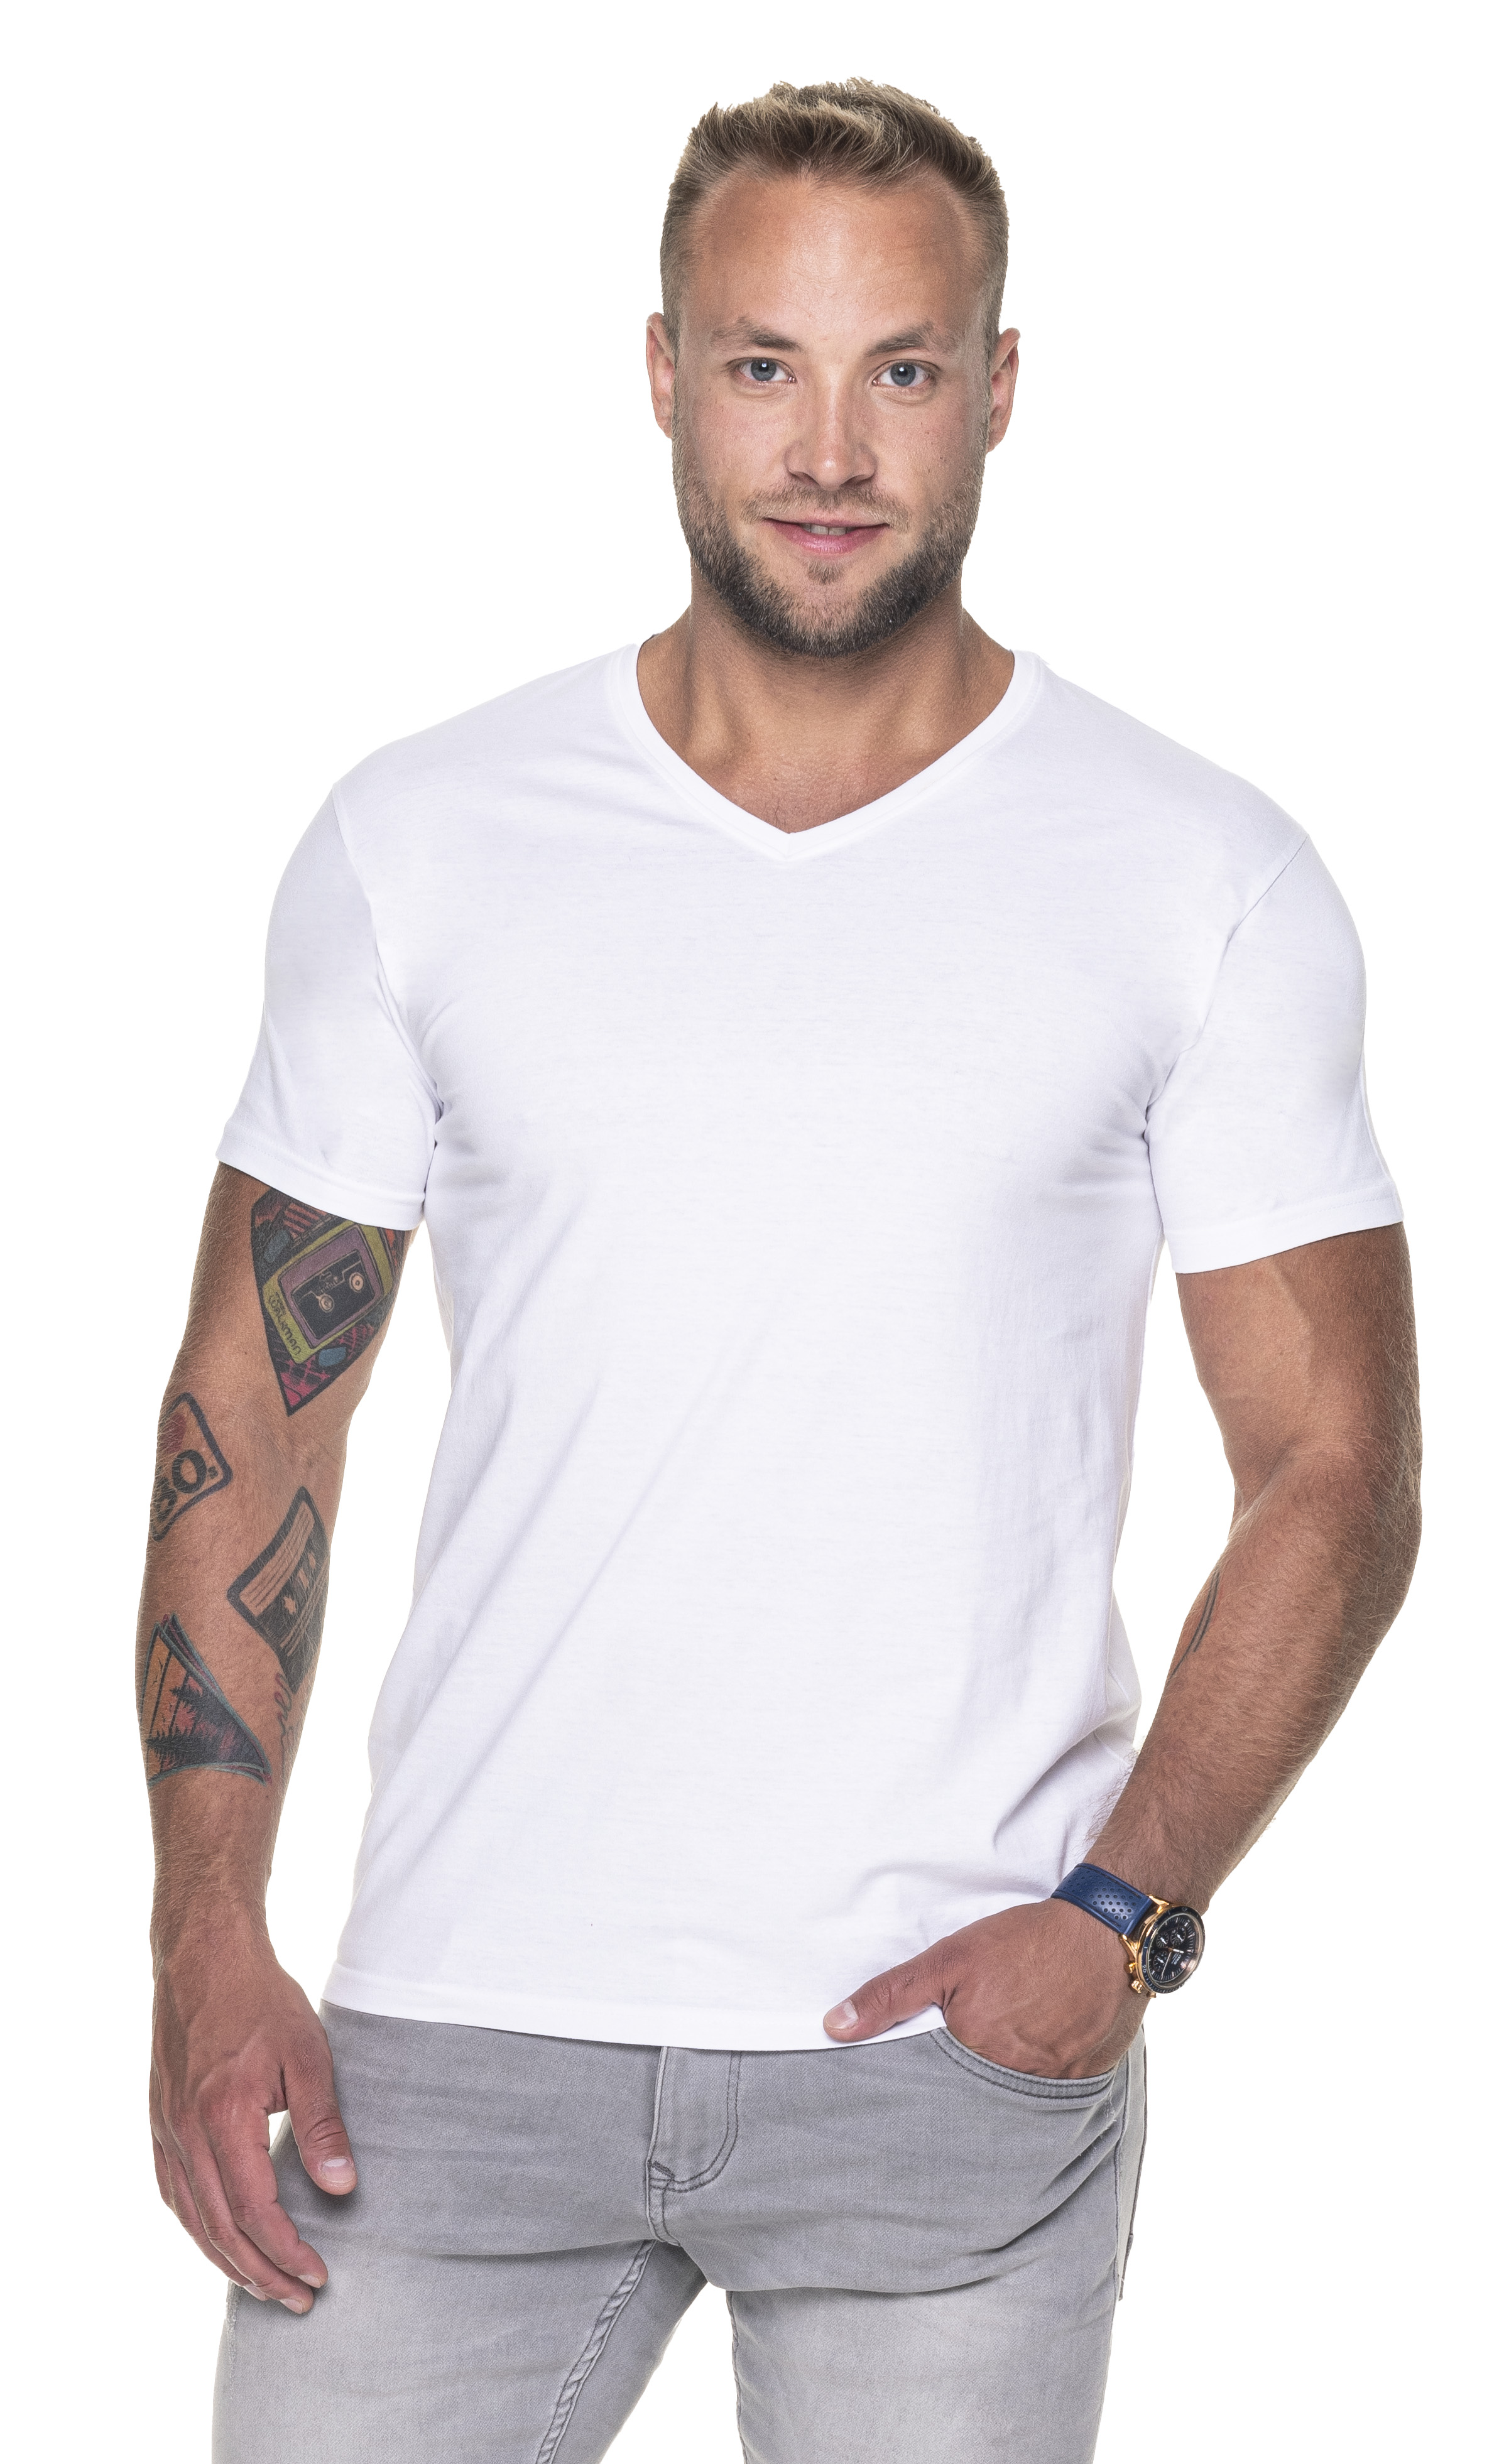 Koszulka Promostars V-Neck - biała